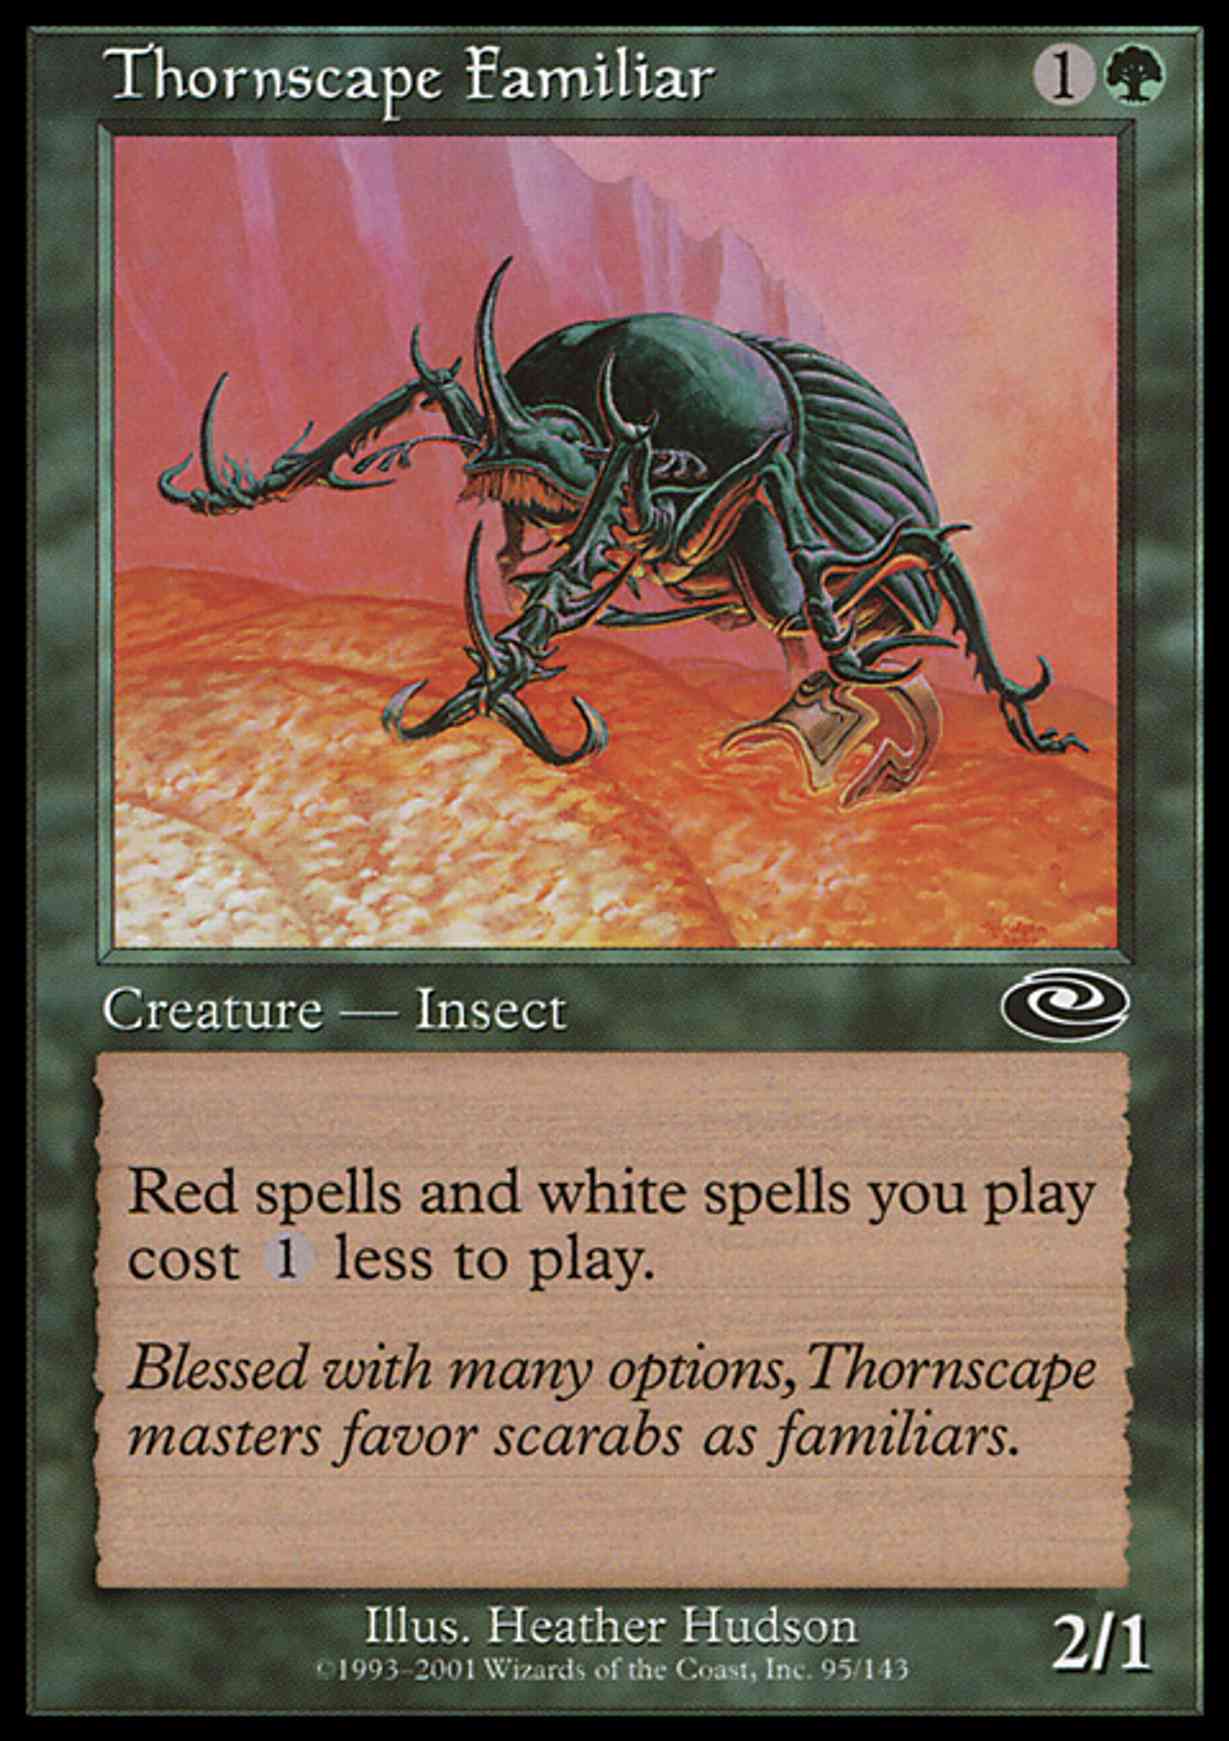 Thornscape Familiar magic card front